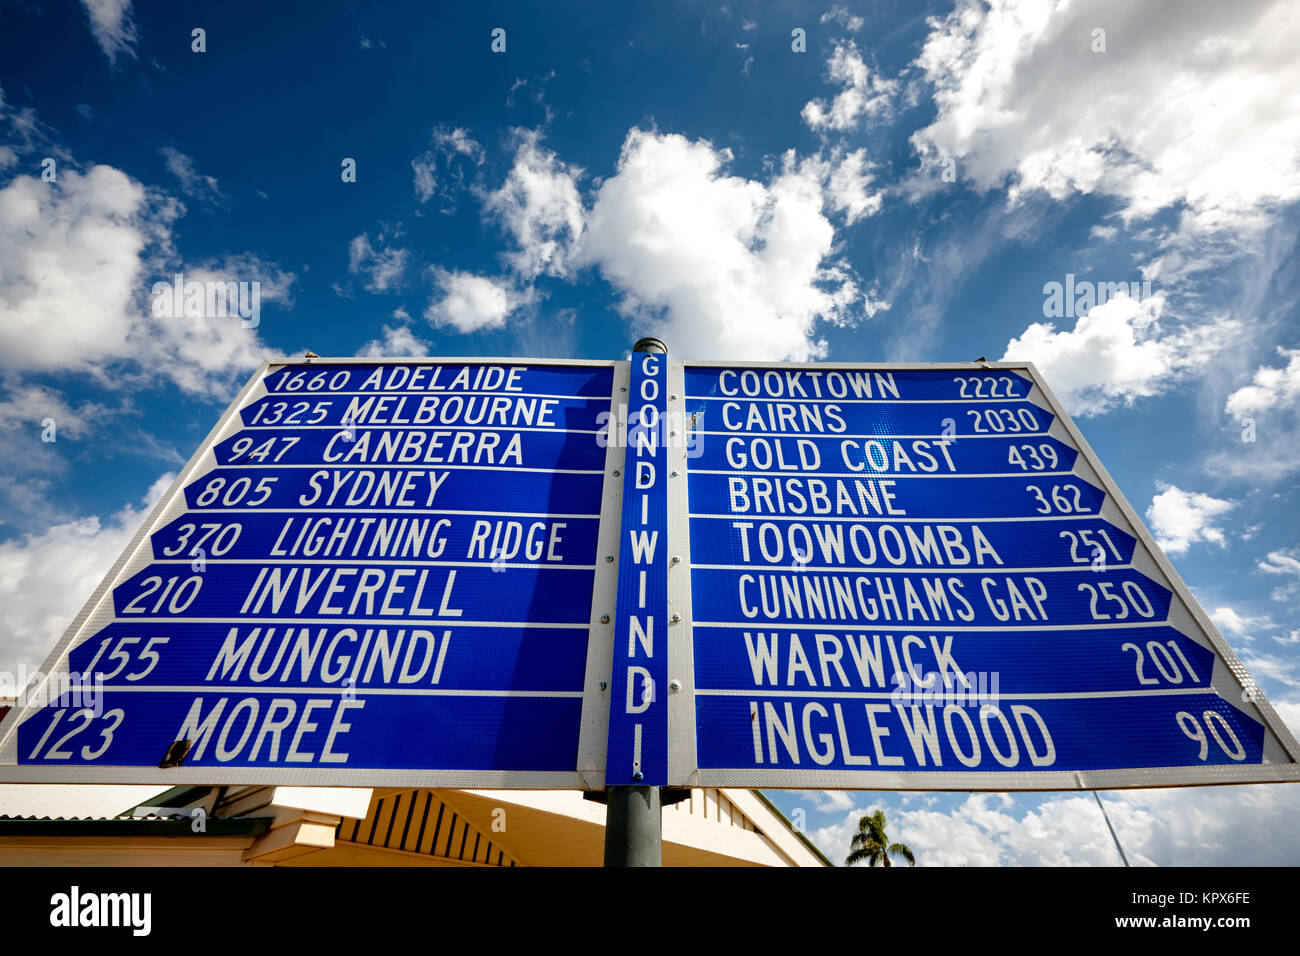 Large tourist signin Goondiwindi, Queensland. Show distances from Goondiwindi to other destinations. Stock Photo